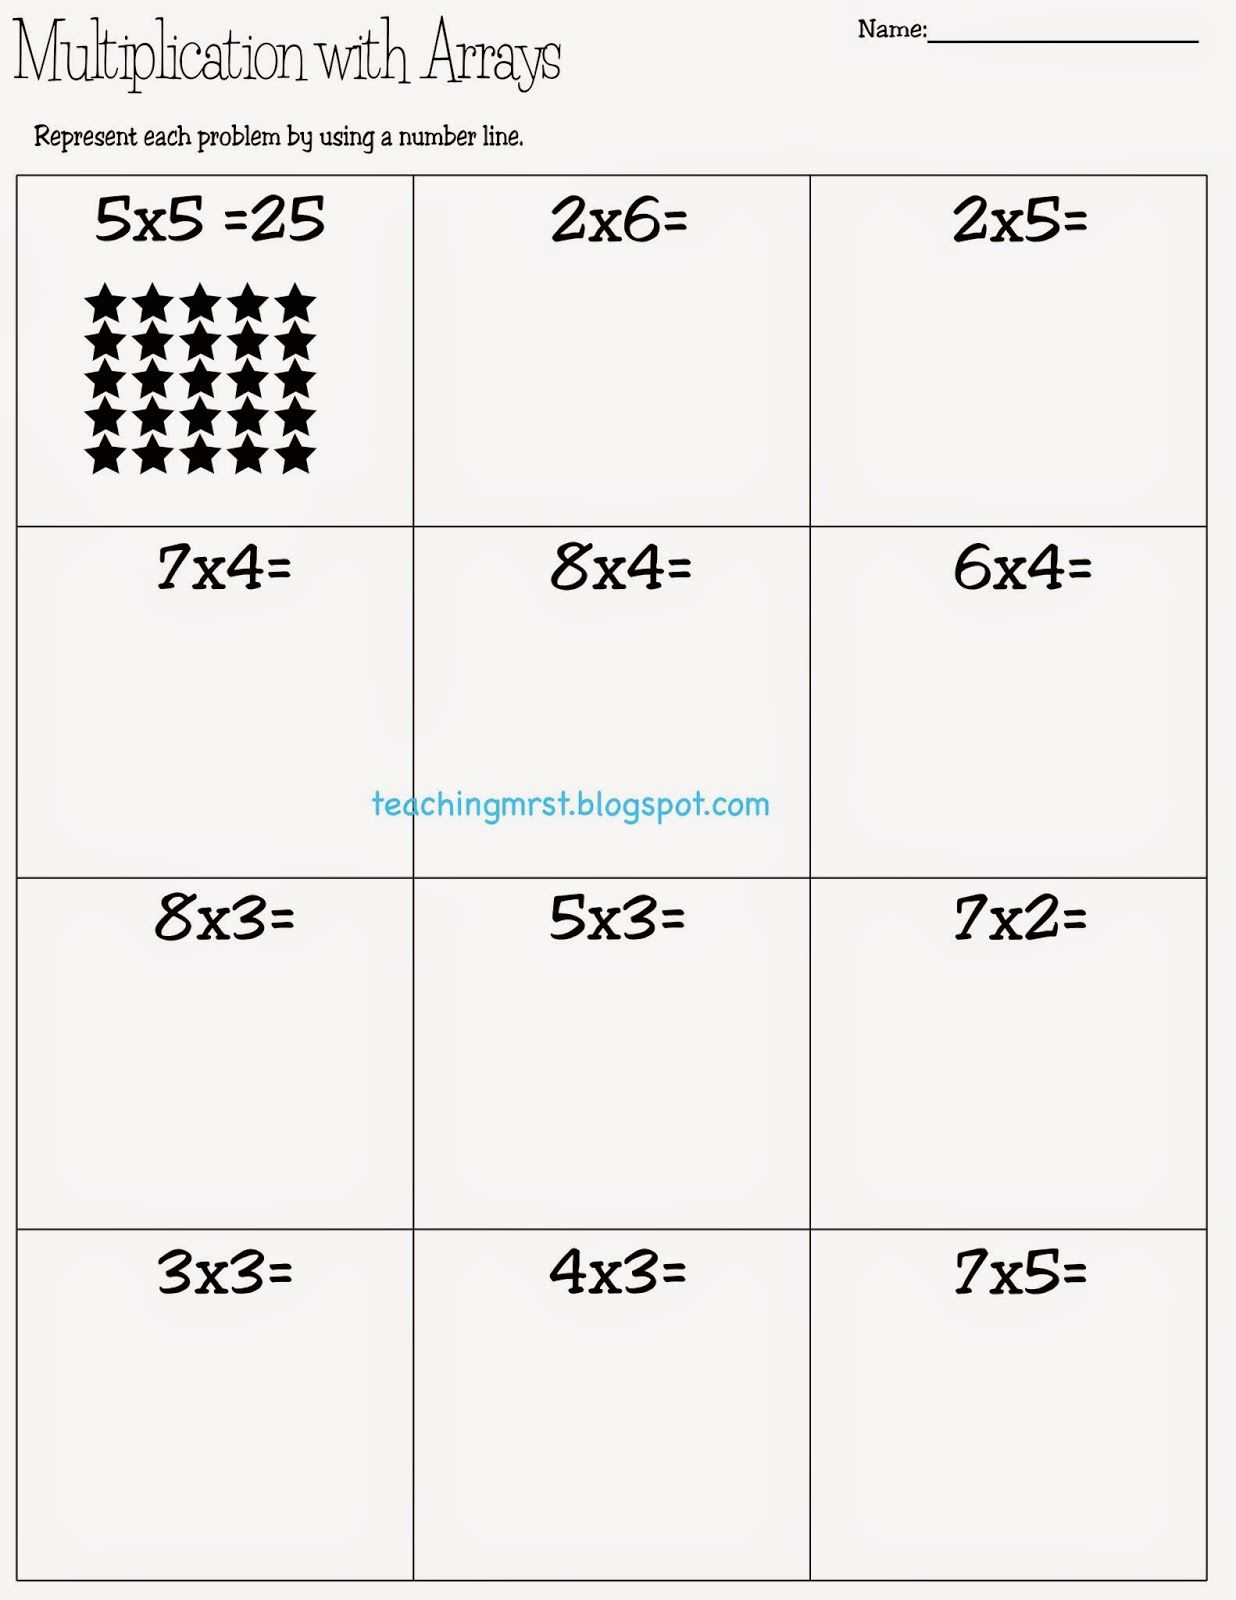 Printable Multiplication Arrays Worksheets